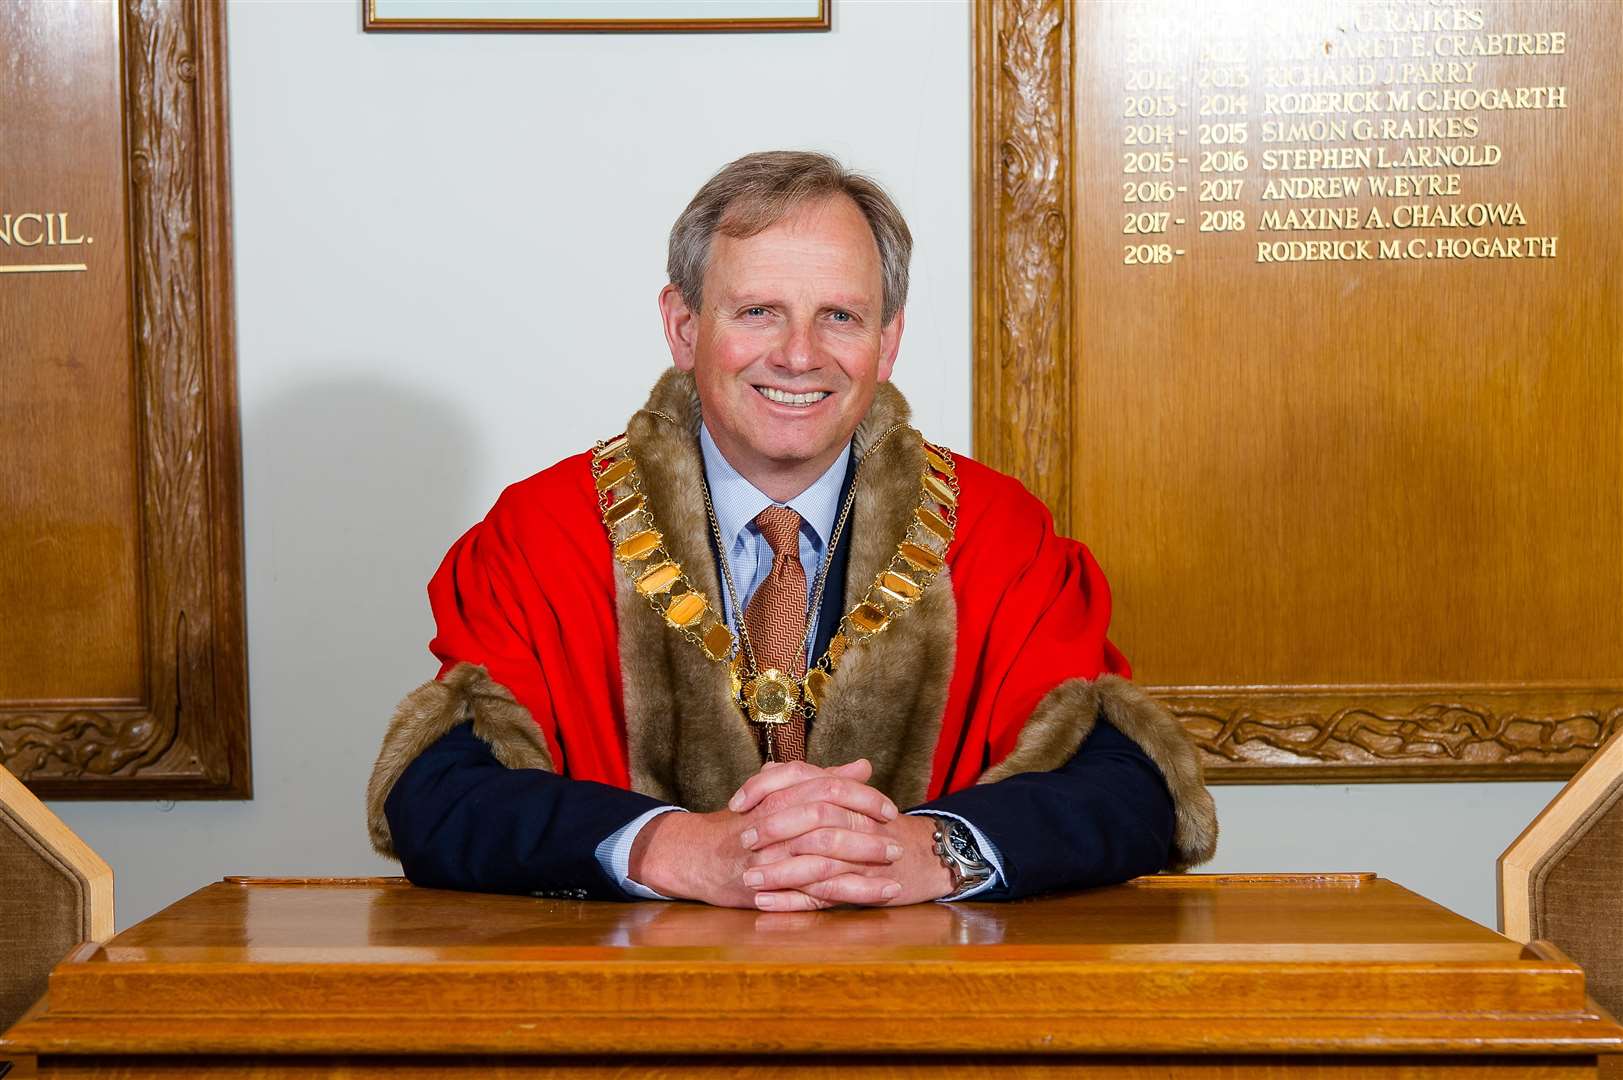 The new Mayor for Sevenoaks Cllr Nicholas Busvine OBE